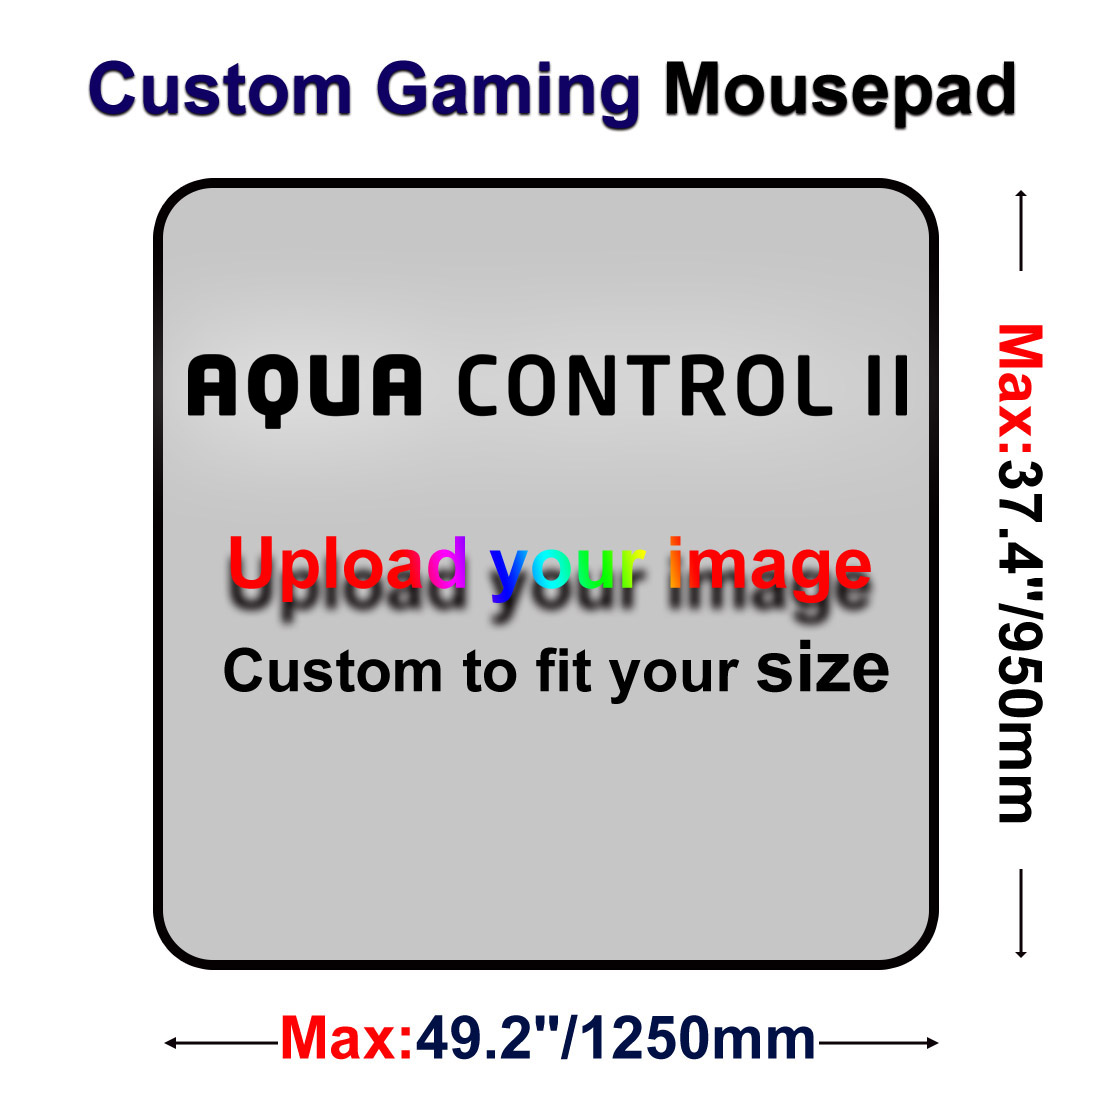 X-raypad Aqua Control Plus Gaming Mouse Pads - Wave Series